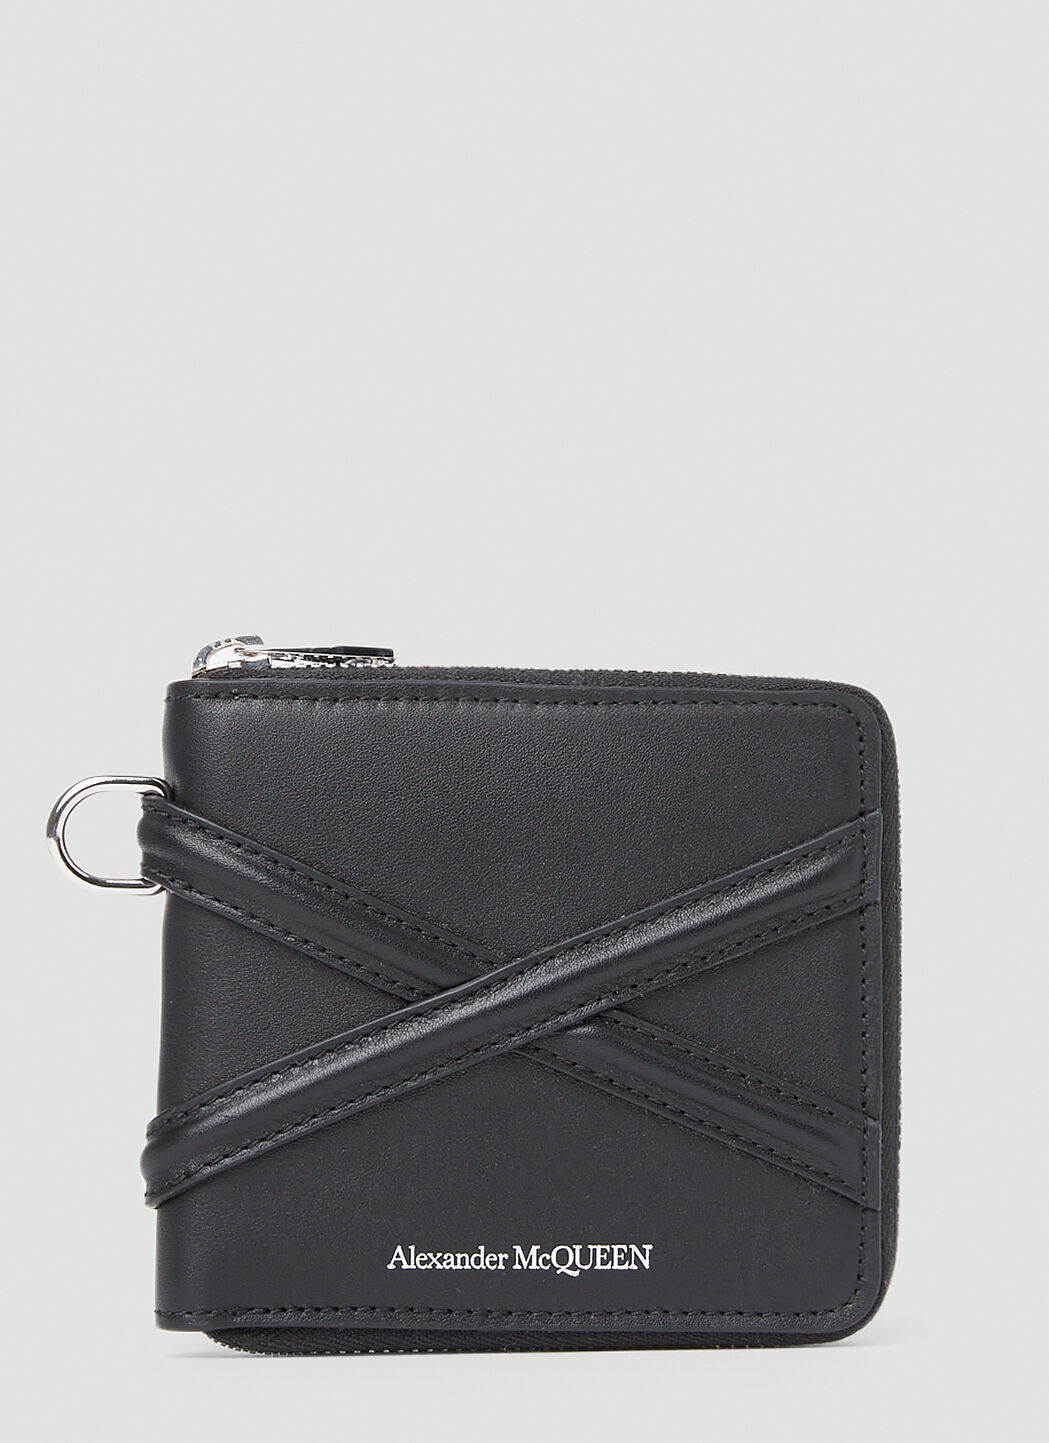 Alexander McQueen Logo Wallet Black amq0152016